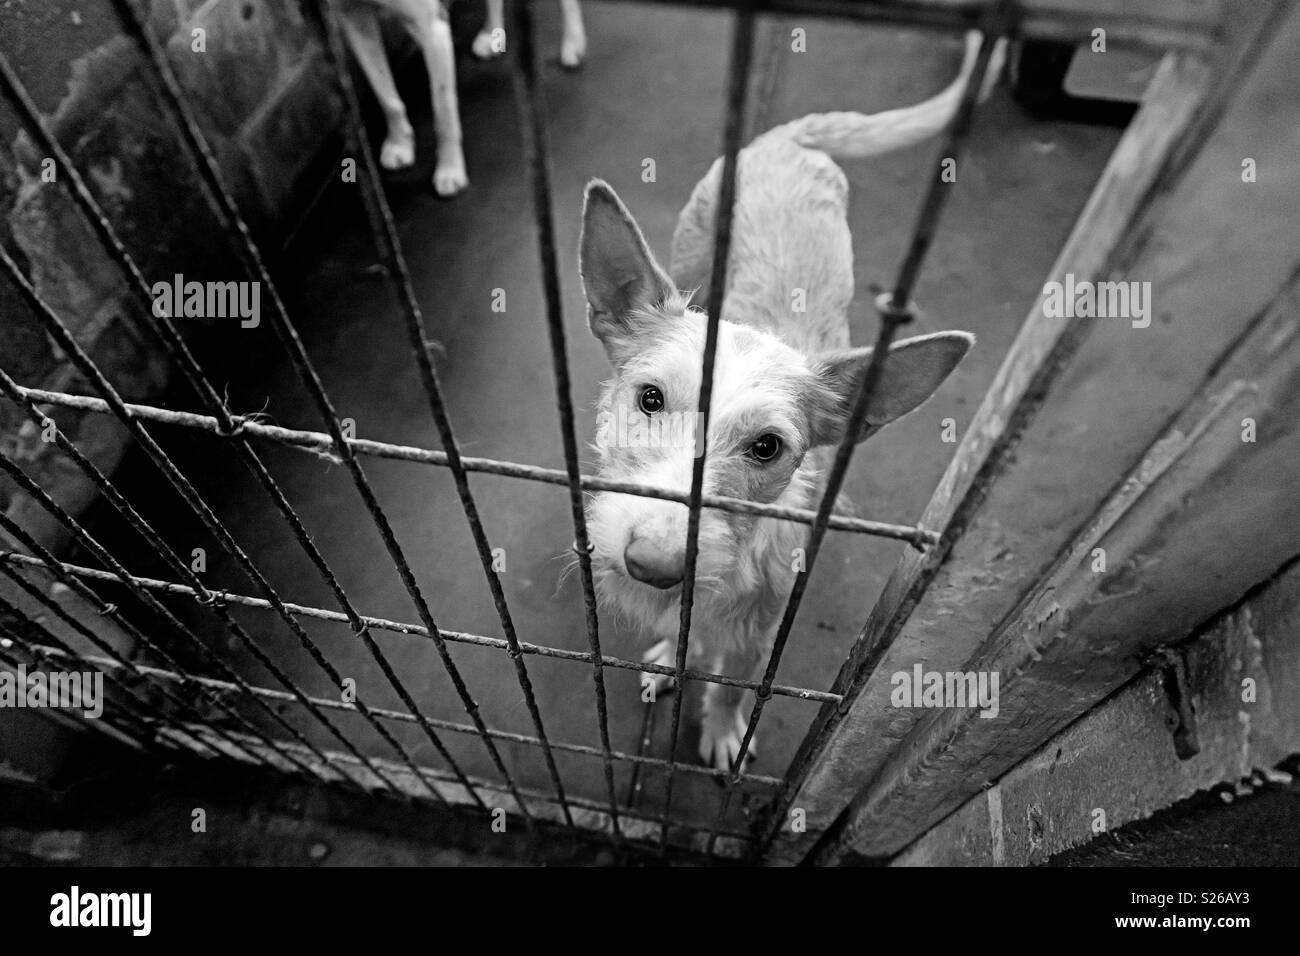 Abandoned and caged dog Stock Photo